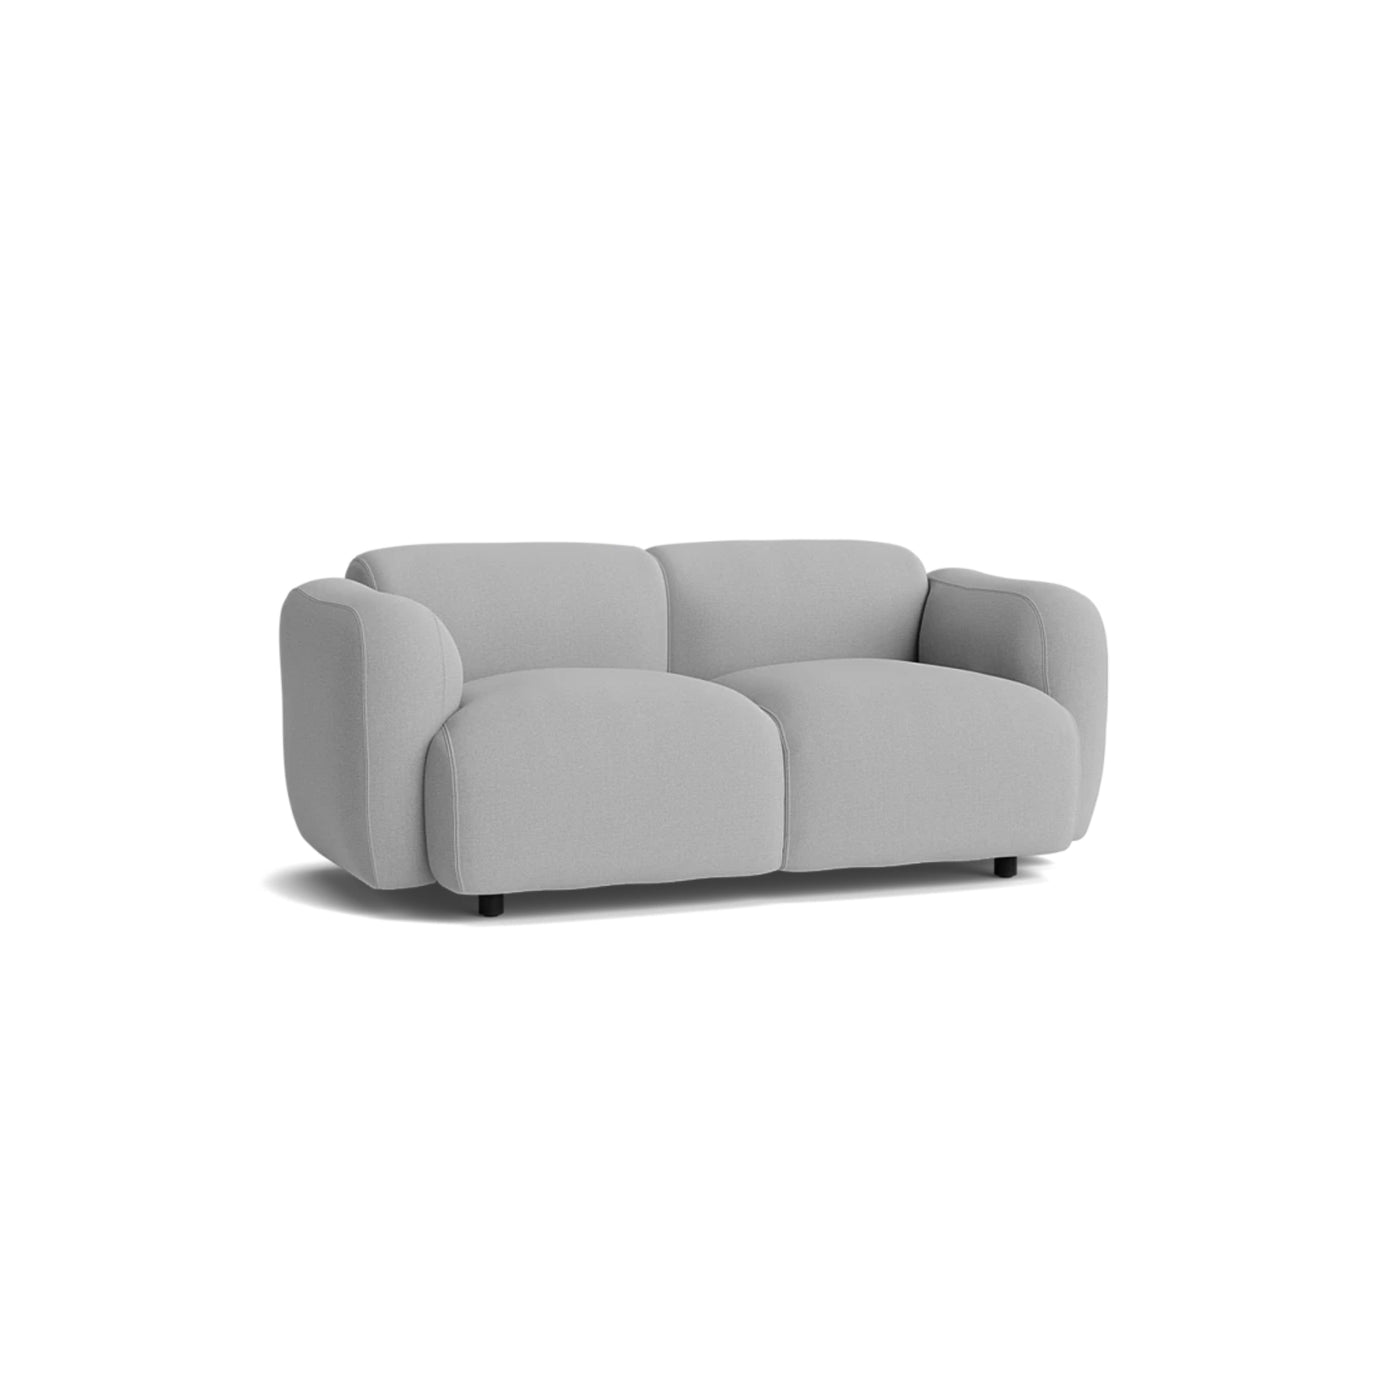 Normann Copenhagen Swell 2 Seater Sofa at someday designs. #colour_steelcut-trio-133